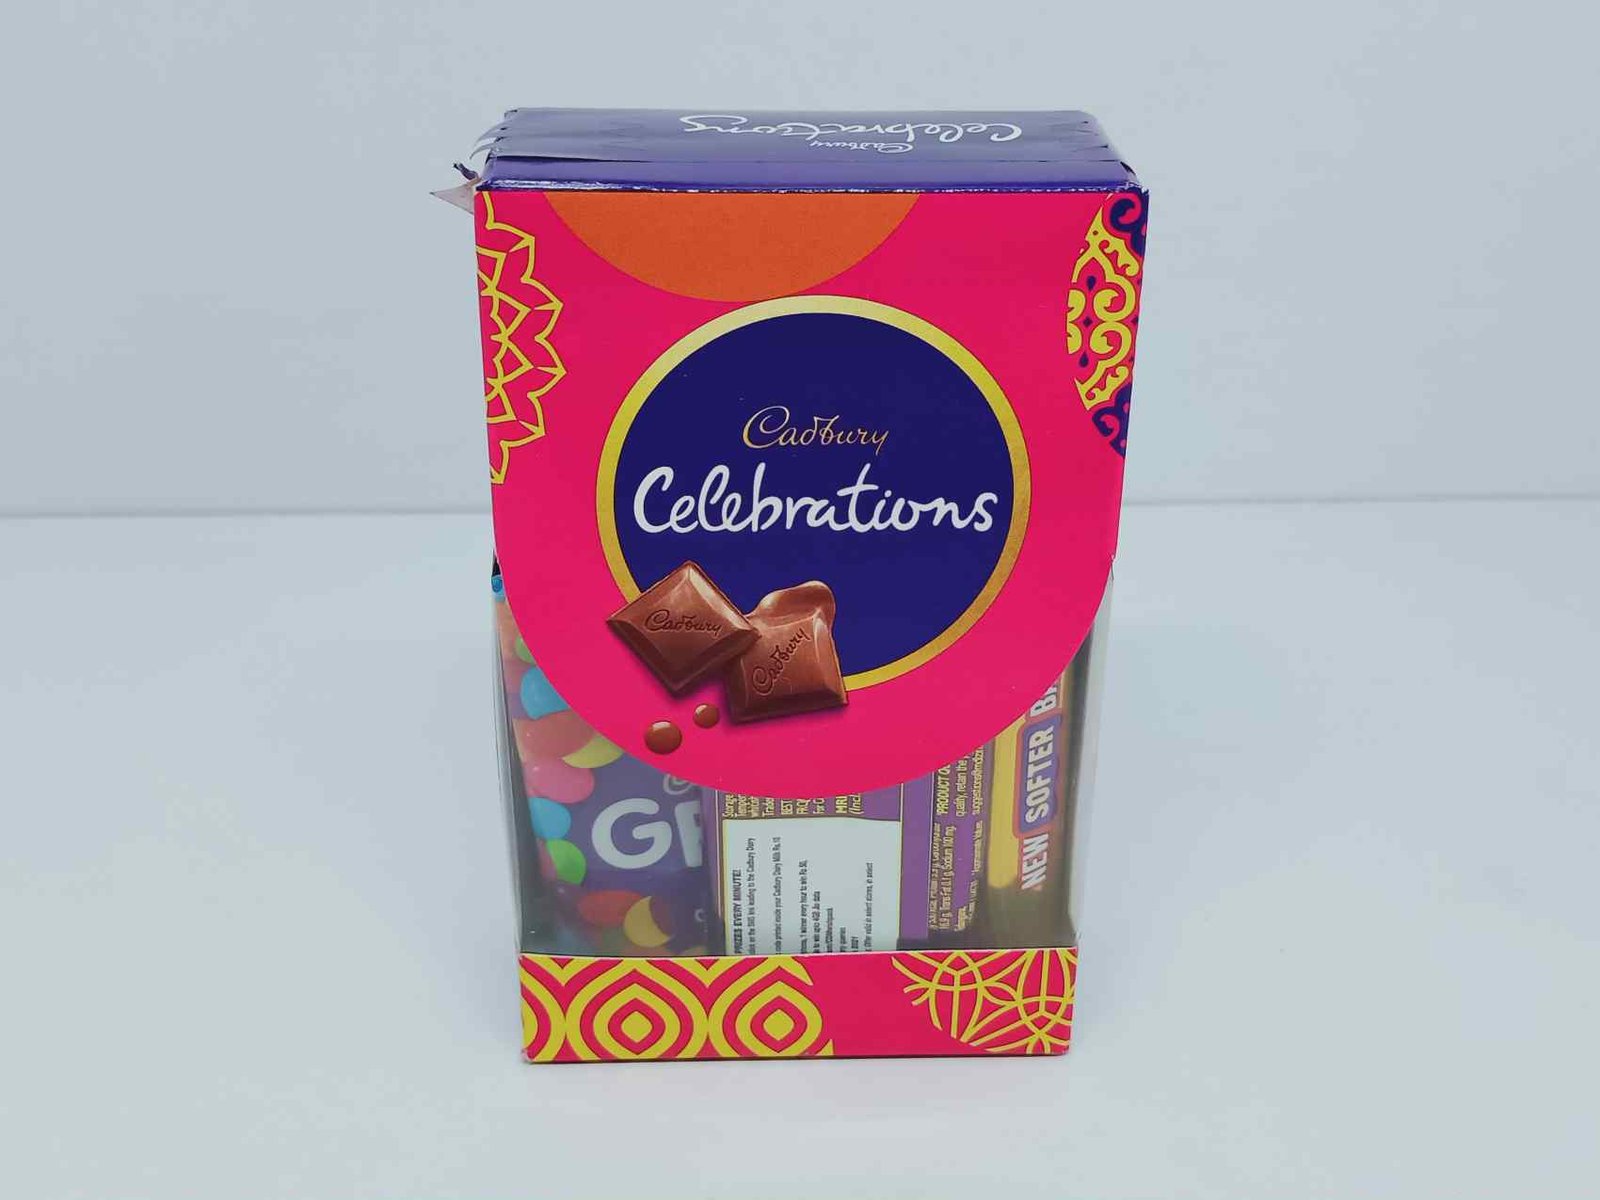 Cadbury celebrations gift pack, 62.2 grams